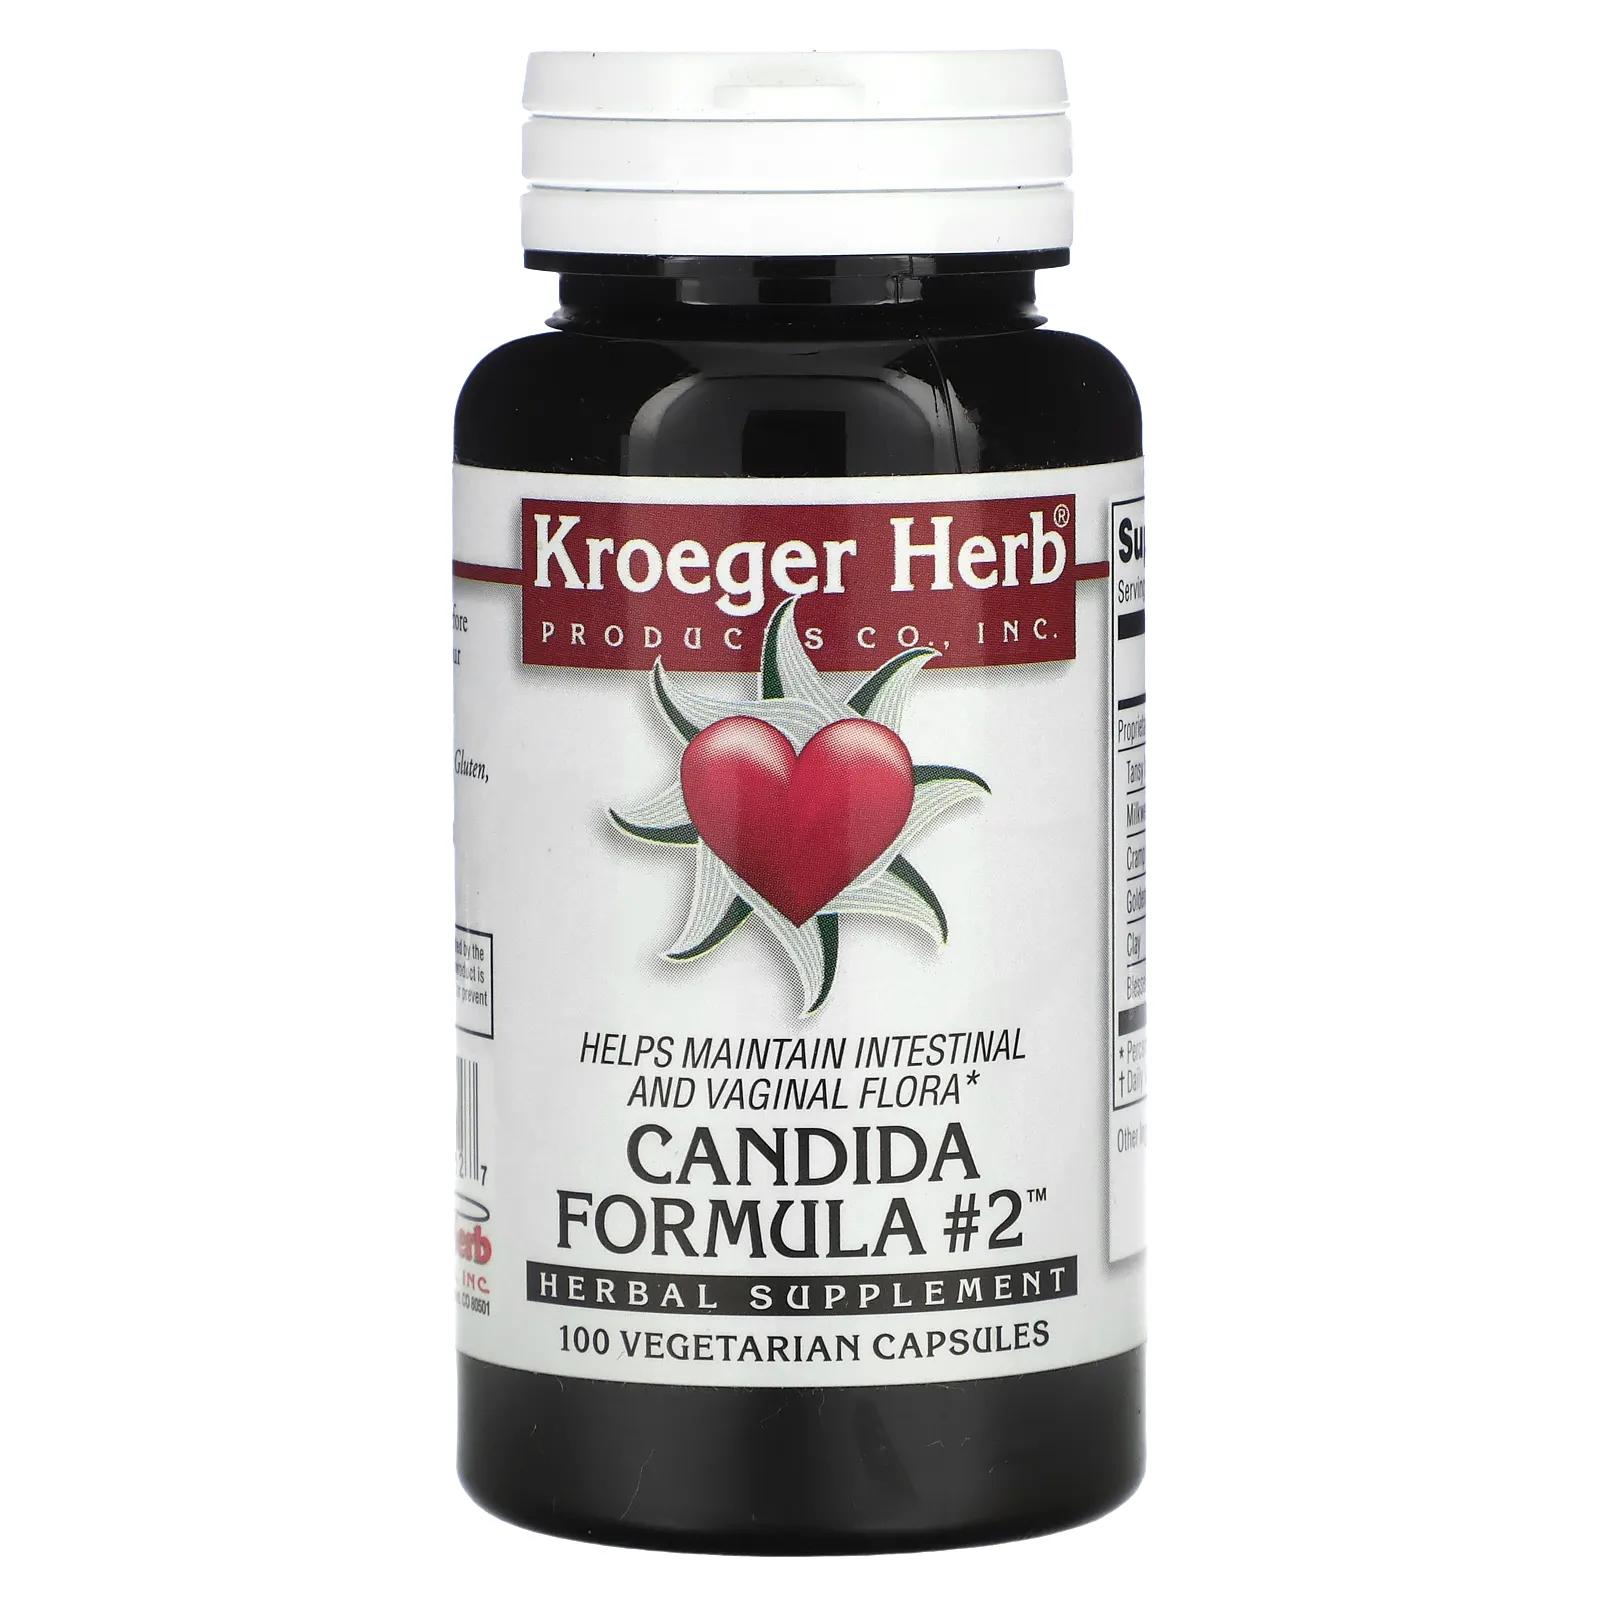 kroeger herb co sunny day таурин дофил 100 таблеток Kroeger Herb Co Candida Formula # 2 100 вегетарианских капсул